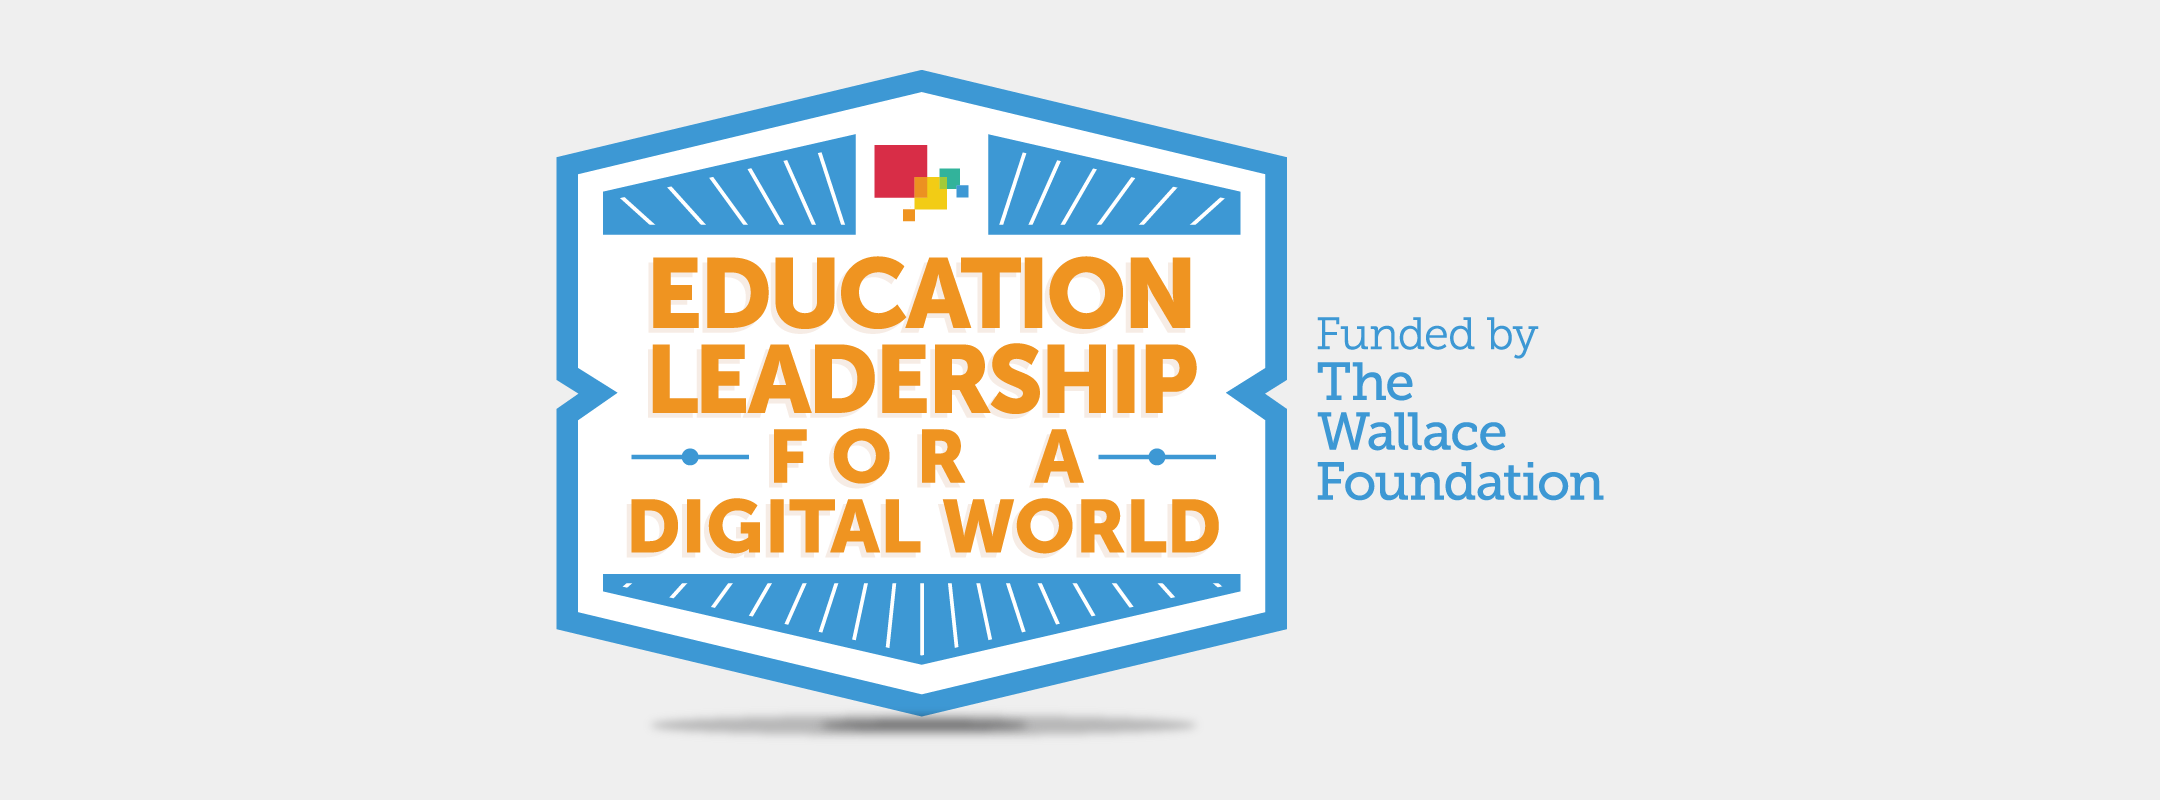 Digital Promise Webinars - Education Leadership for a Digital World